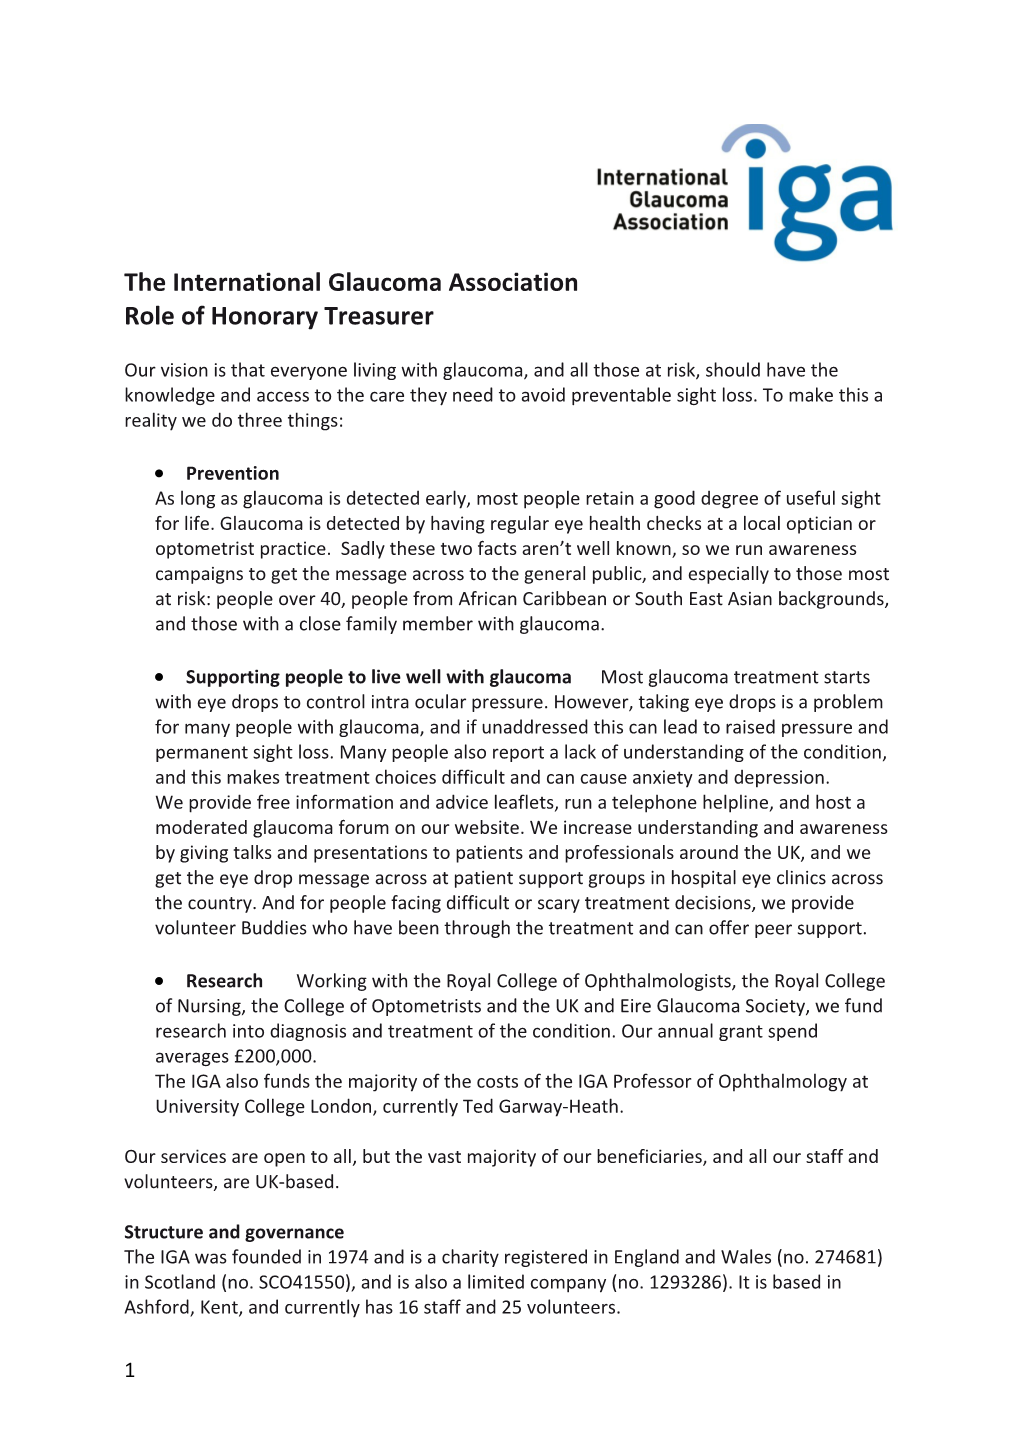 The International Glaucoma Association